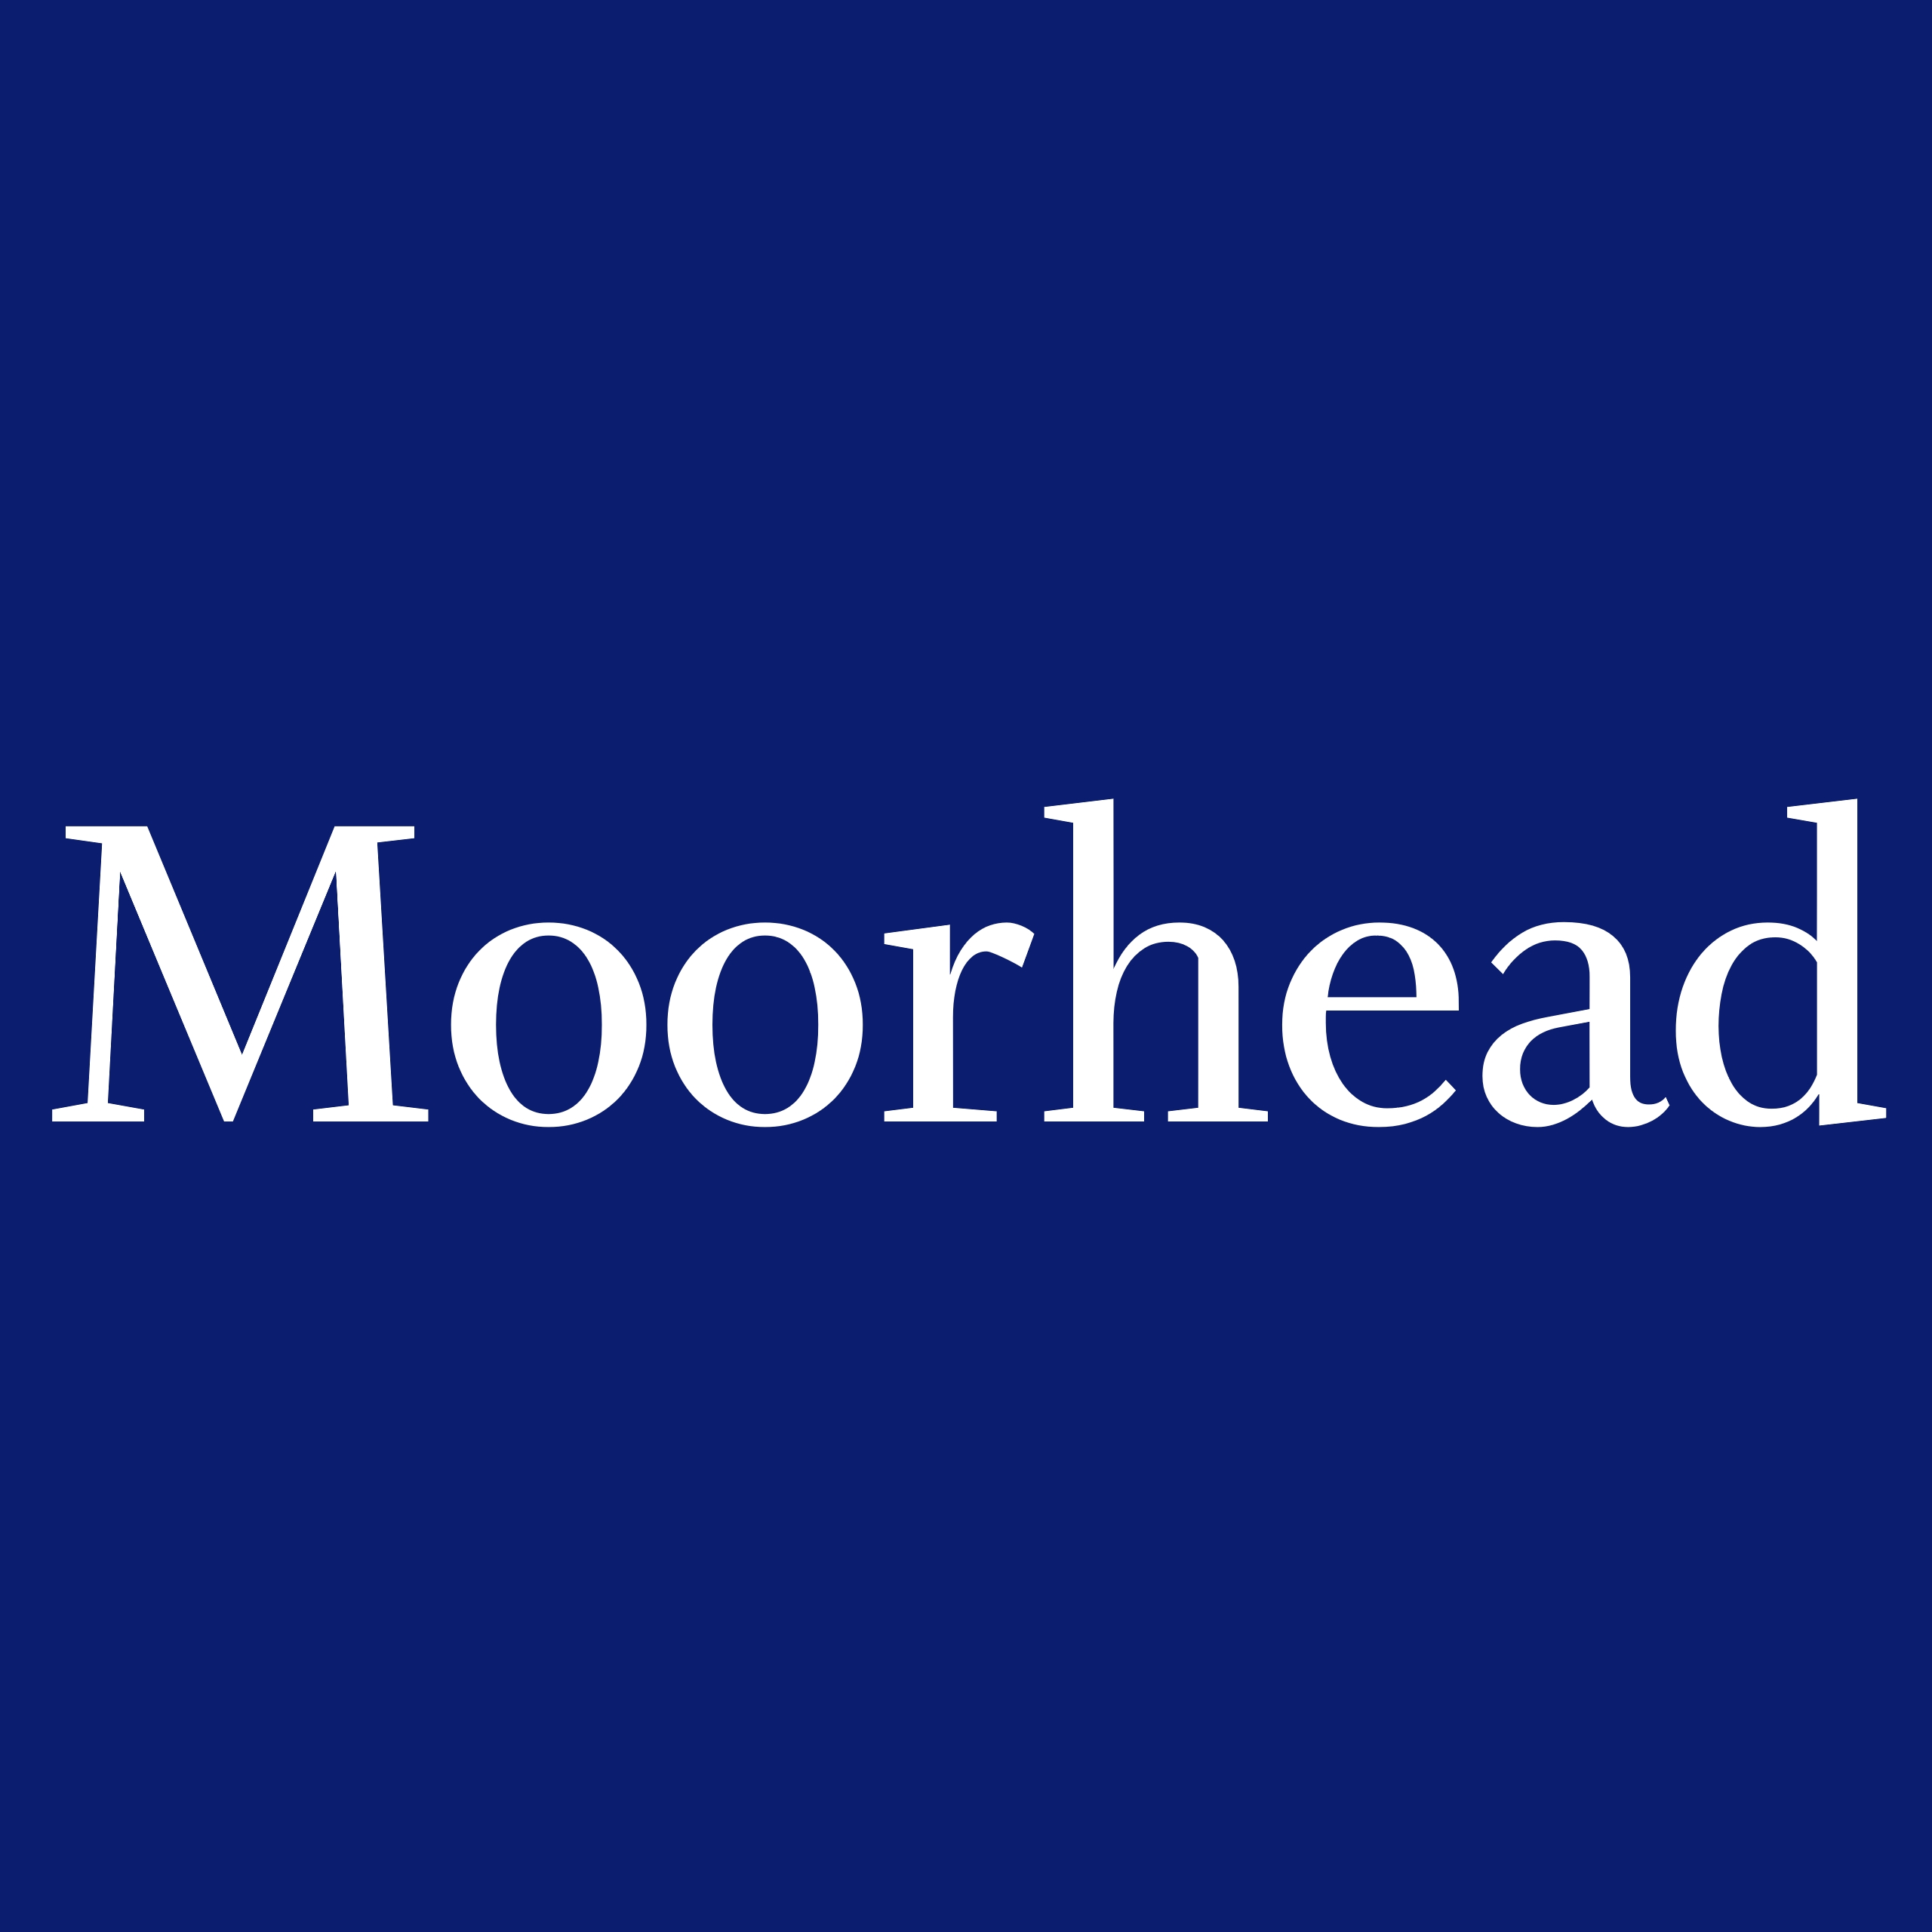 A.C. Moorhead Company